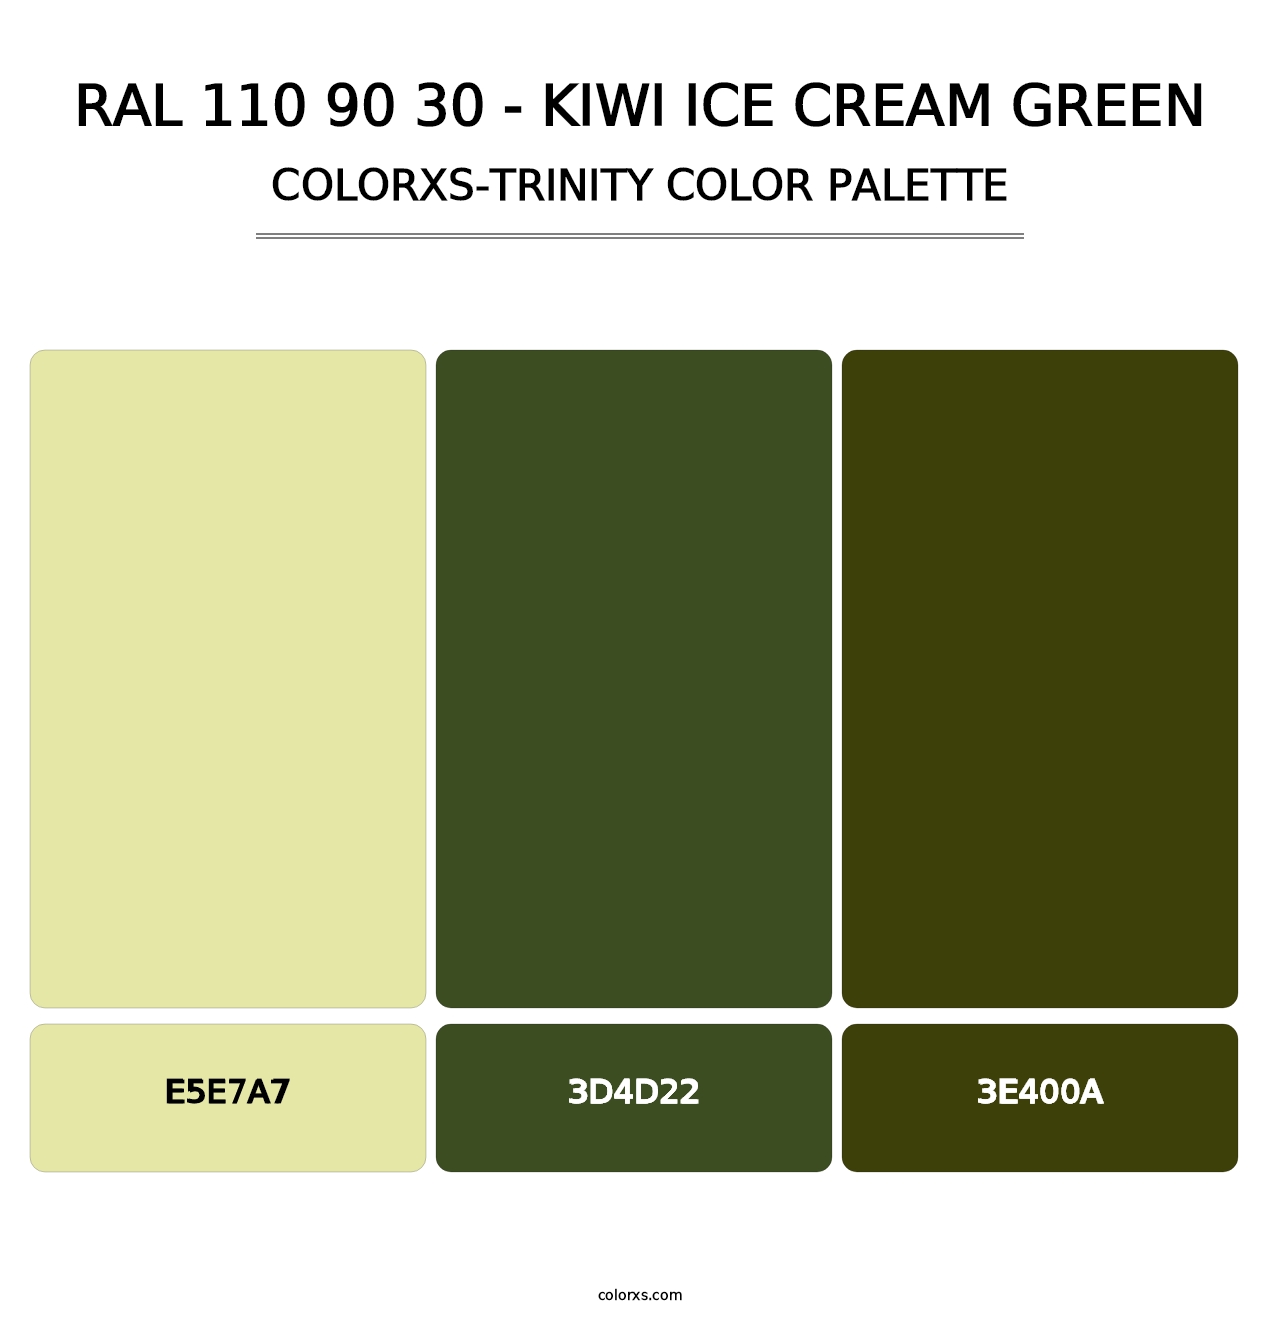 RAL 110 90 30 - Kiwi Ice Cream Green - Colorxs Trinity Palette